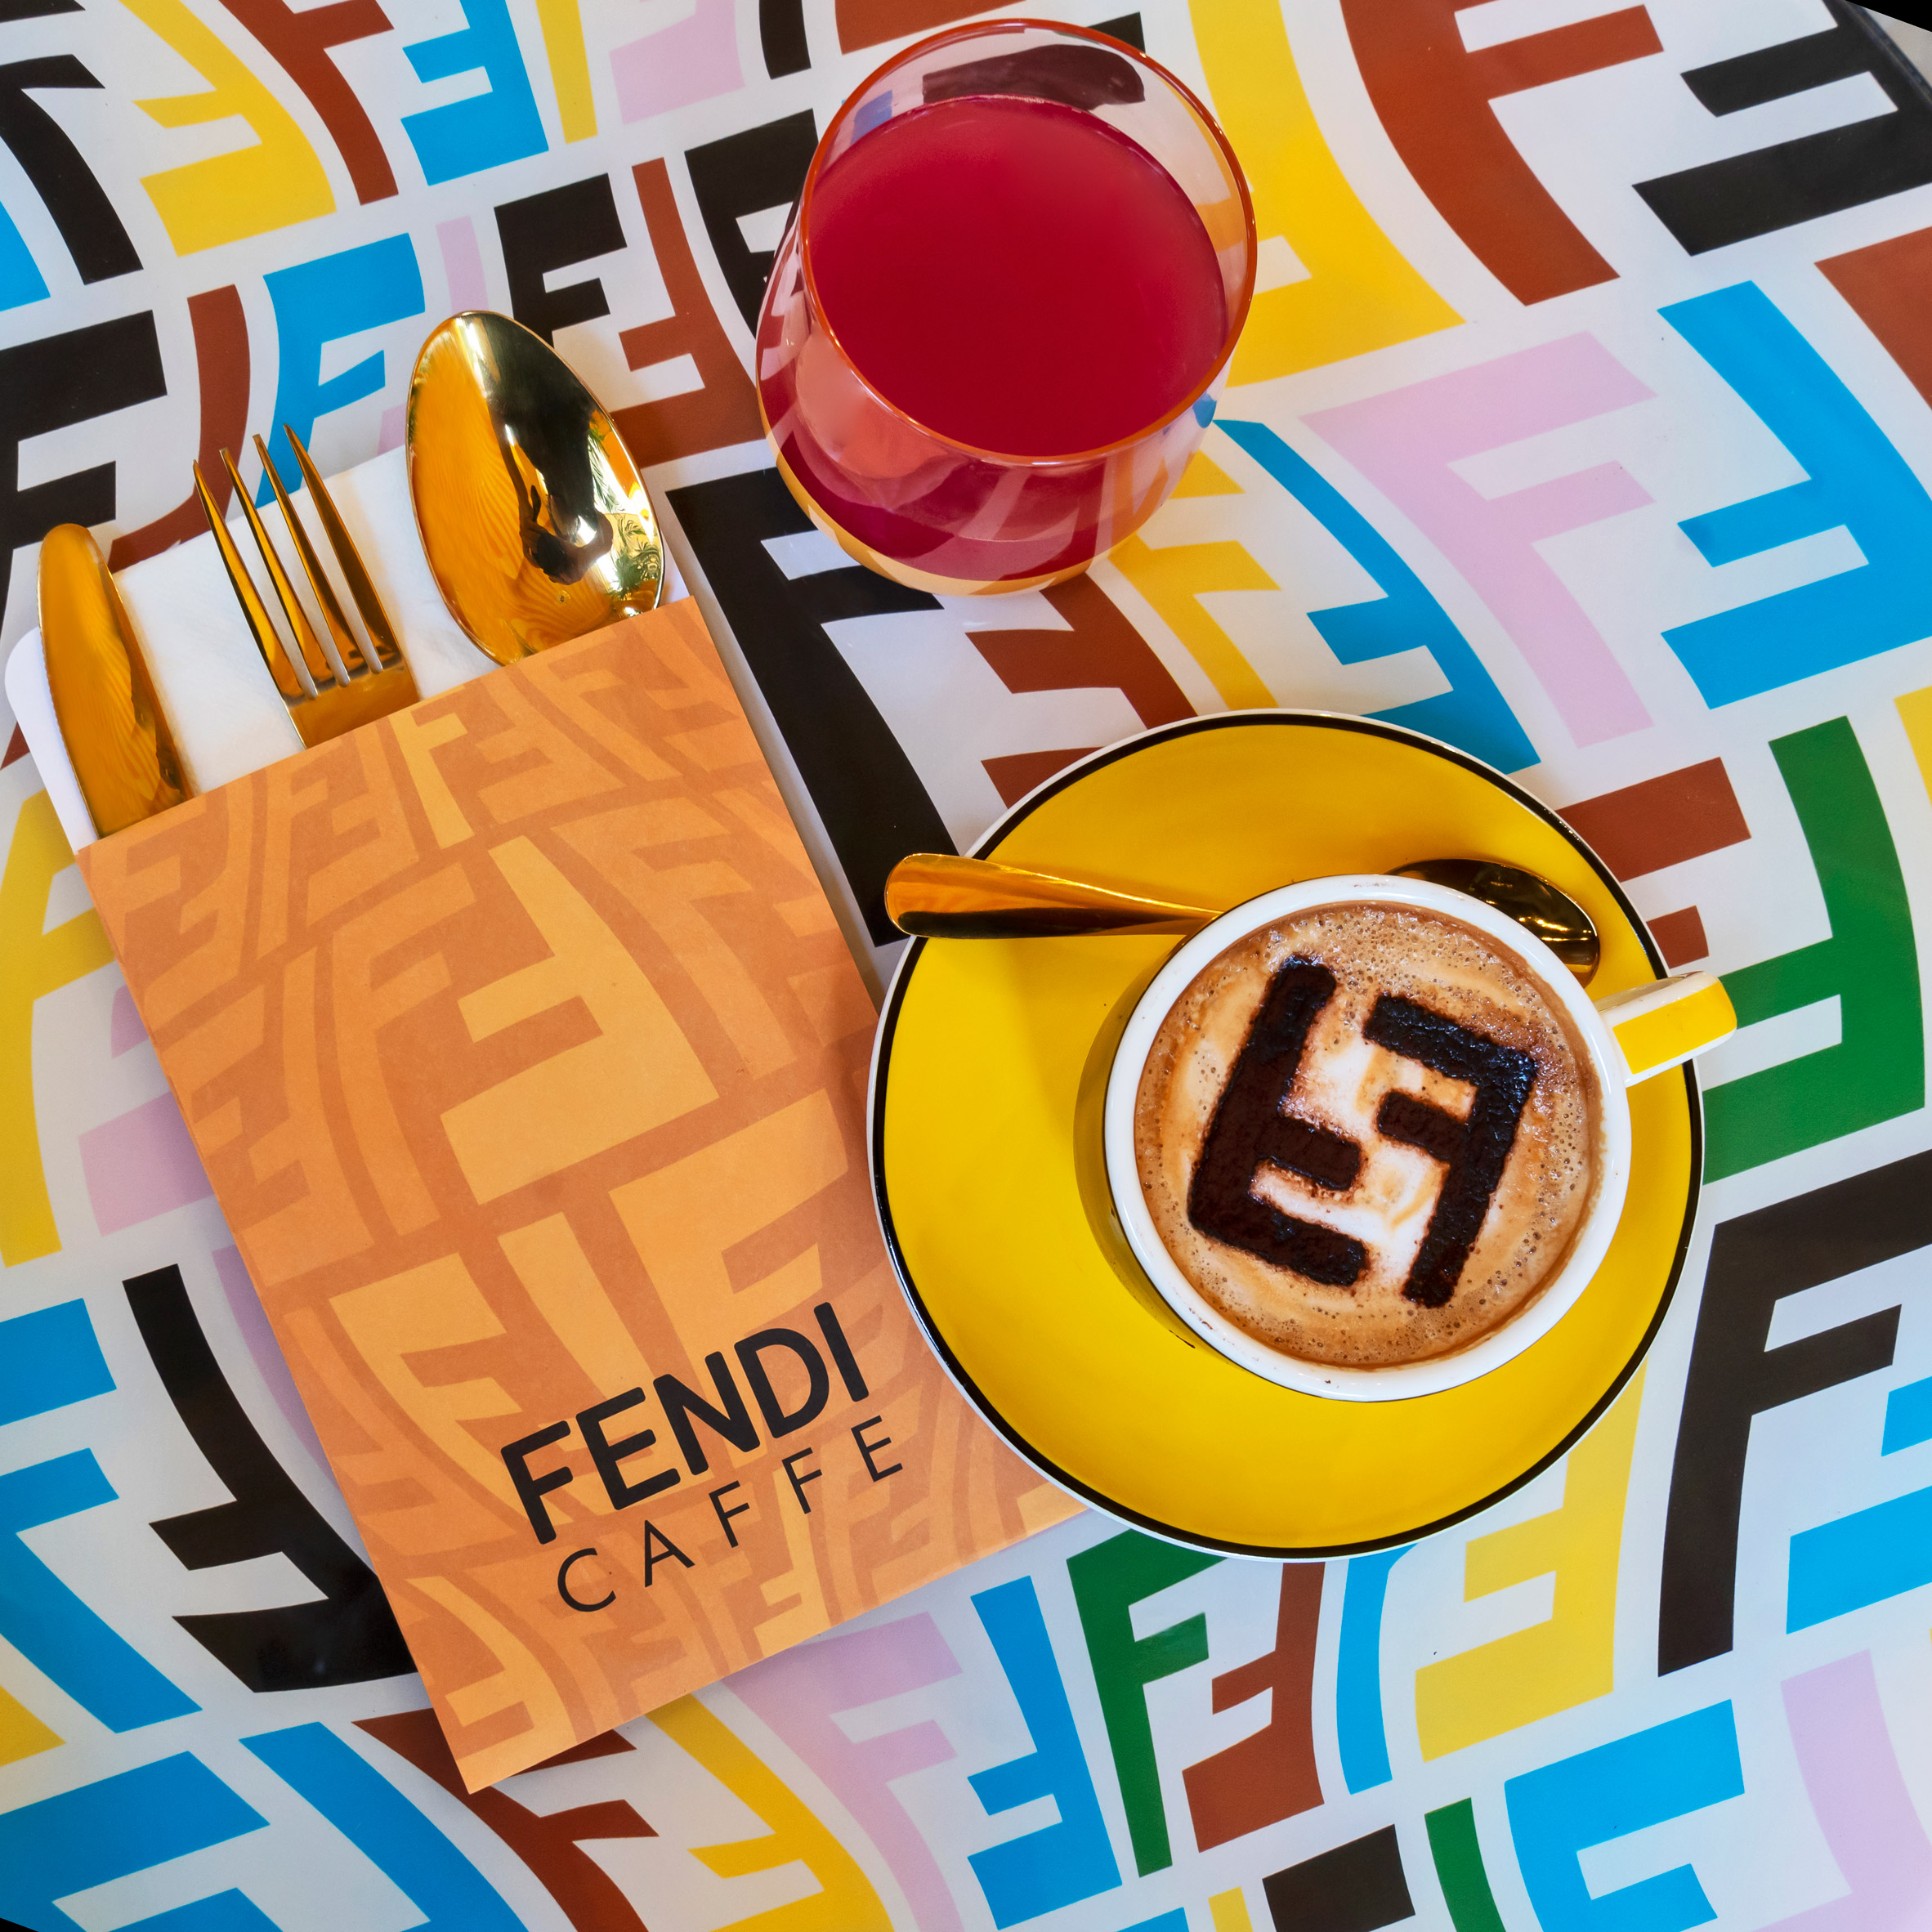 Fendi Caffè by AnniversaireLuxury Retail